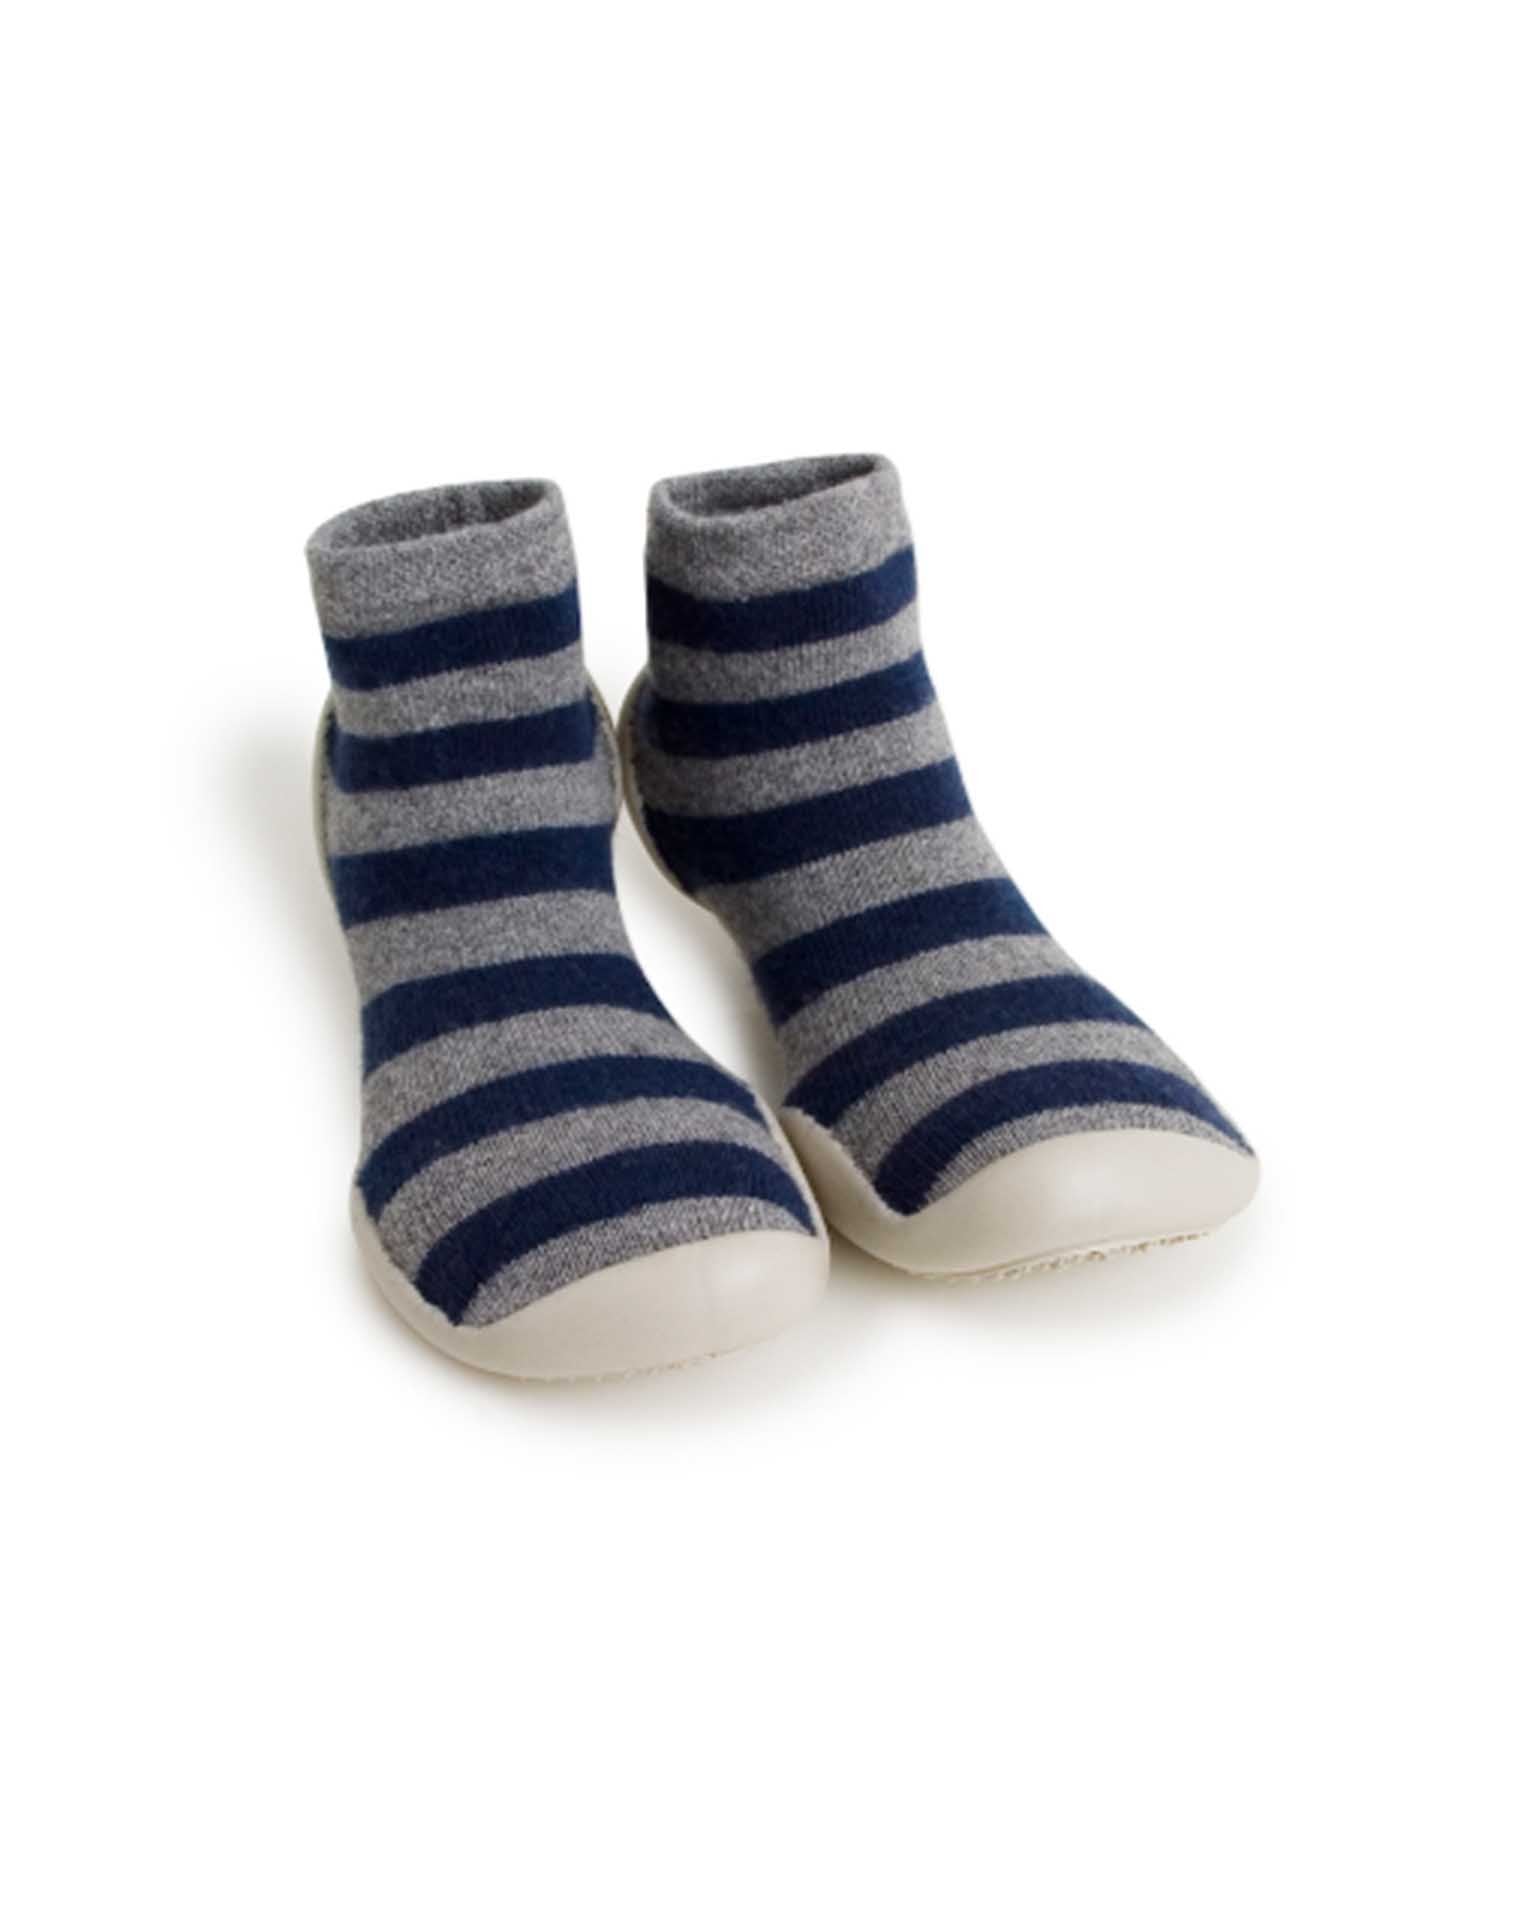 Little collegien accessories slipper socks in mountain stripes